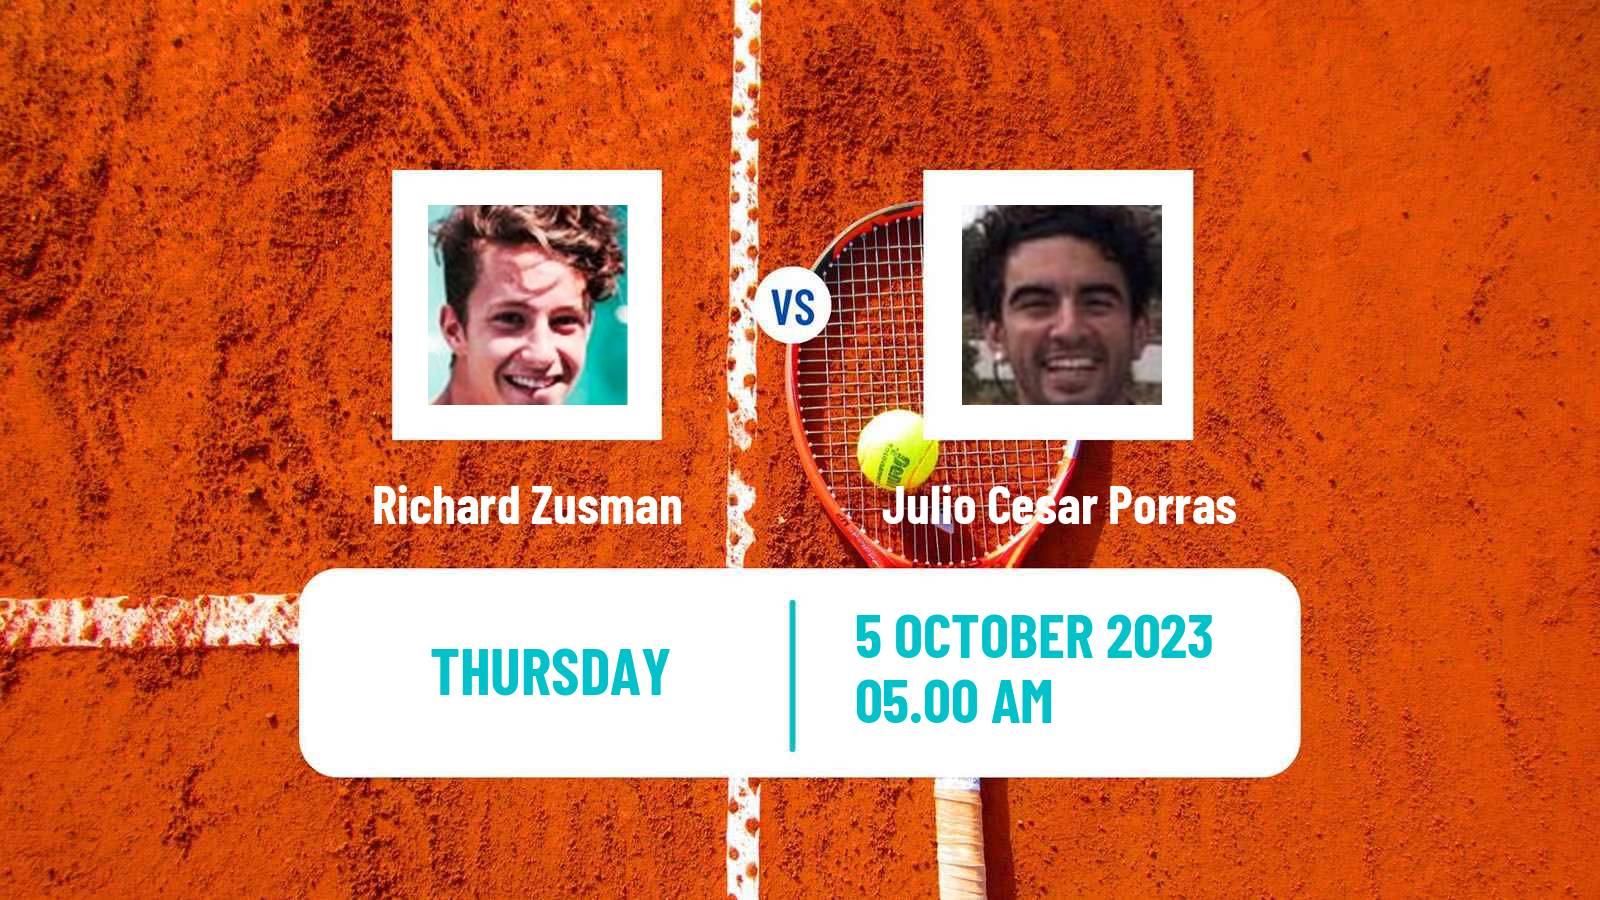 Tennis ITF M25 Zaragoza Men Richard Zusman - Julio Cesar Porras